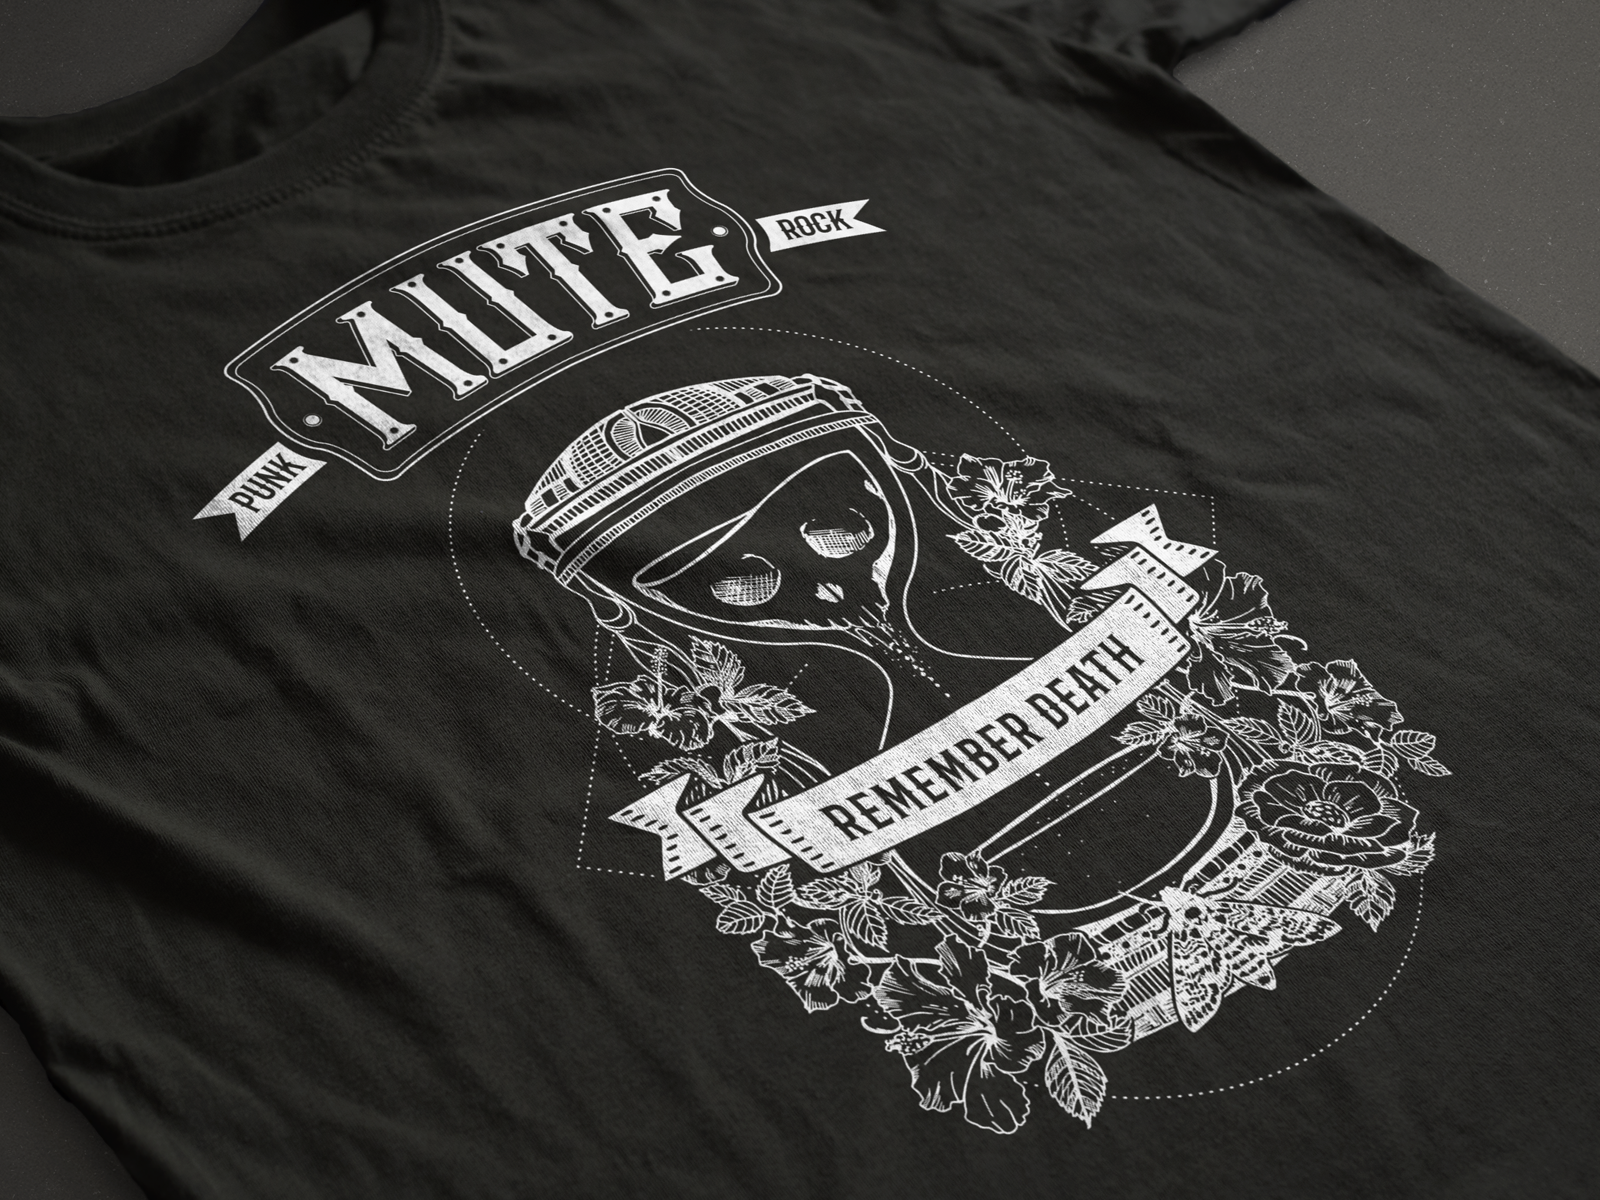 MUTE Punk-Rock - Official T-shirt by Kerosene Design on Dribbble